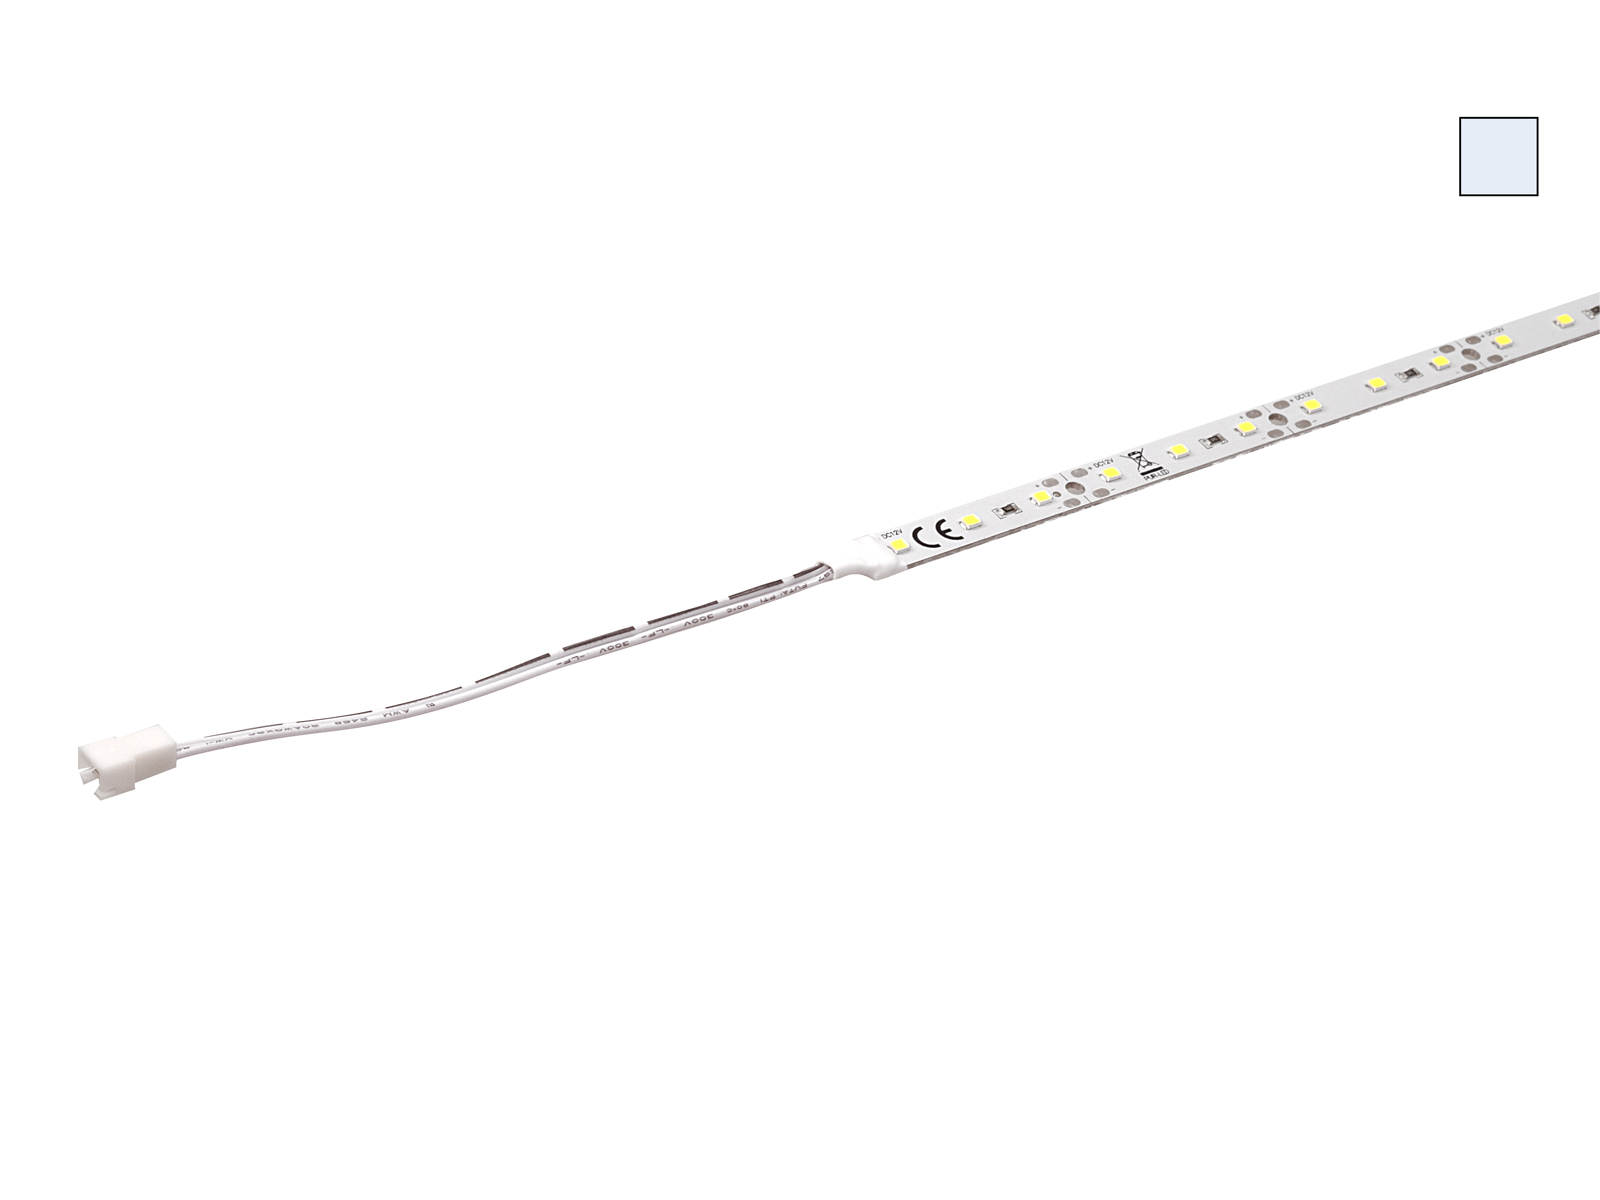 LED-Leisten (starr) in großer Auswahl vom Fachmann | PUR-LED